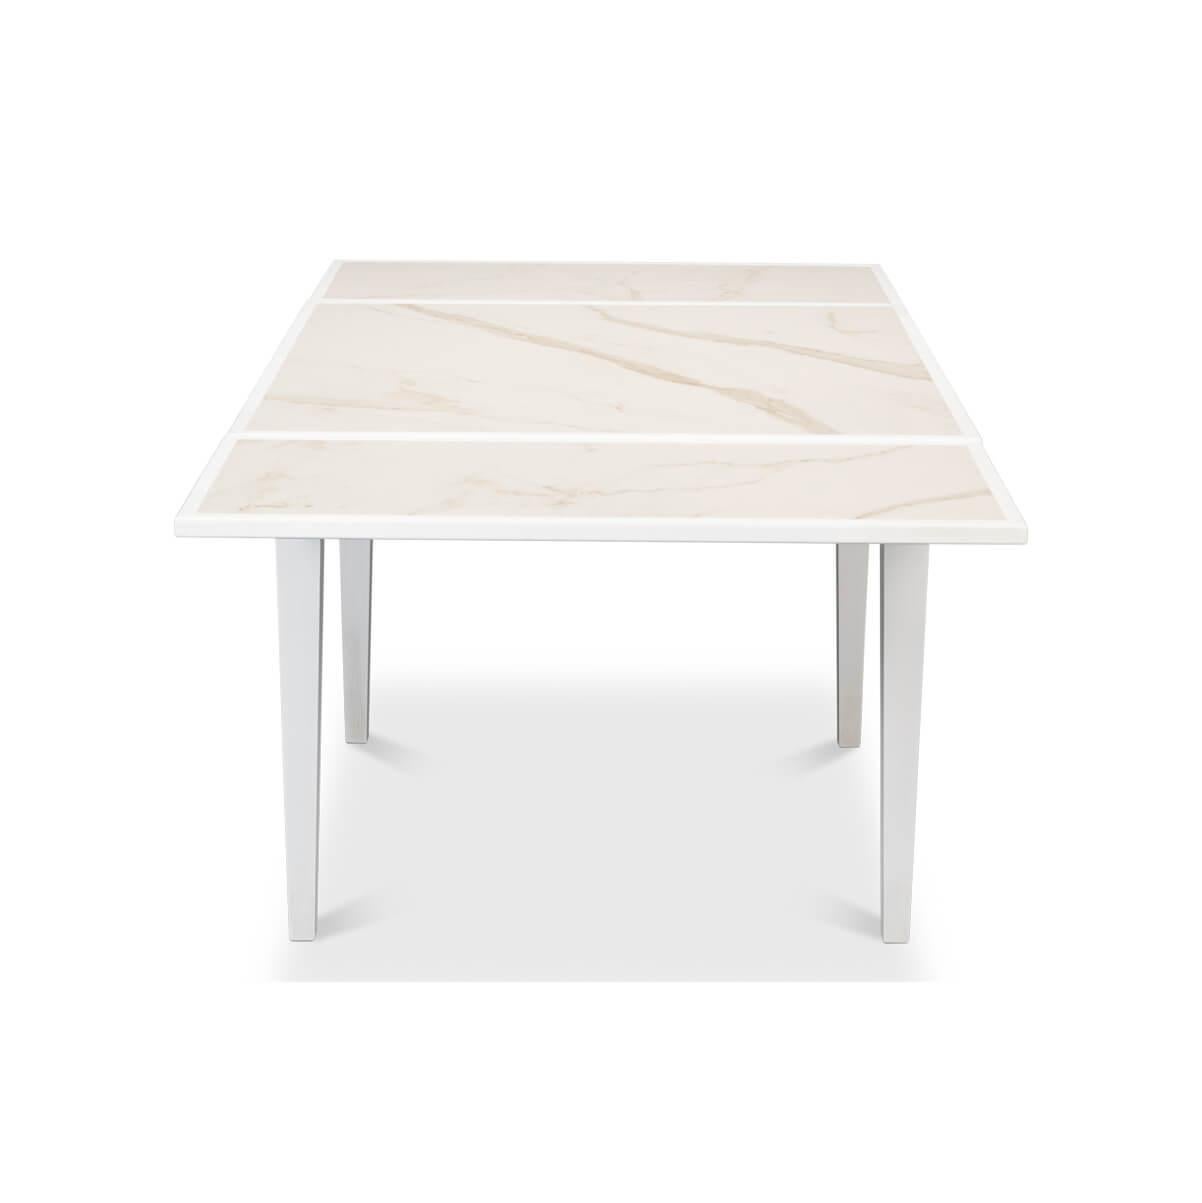 Européen Table italienne Cortina White Draw Leaf Table en vente